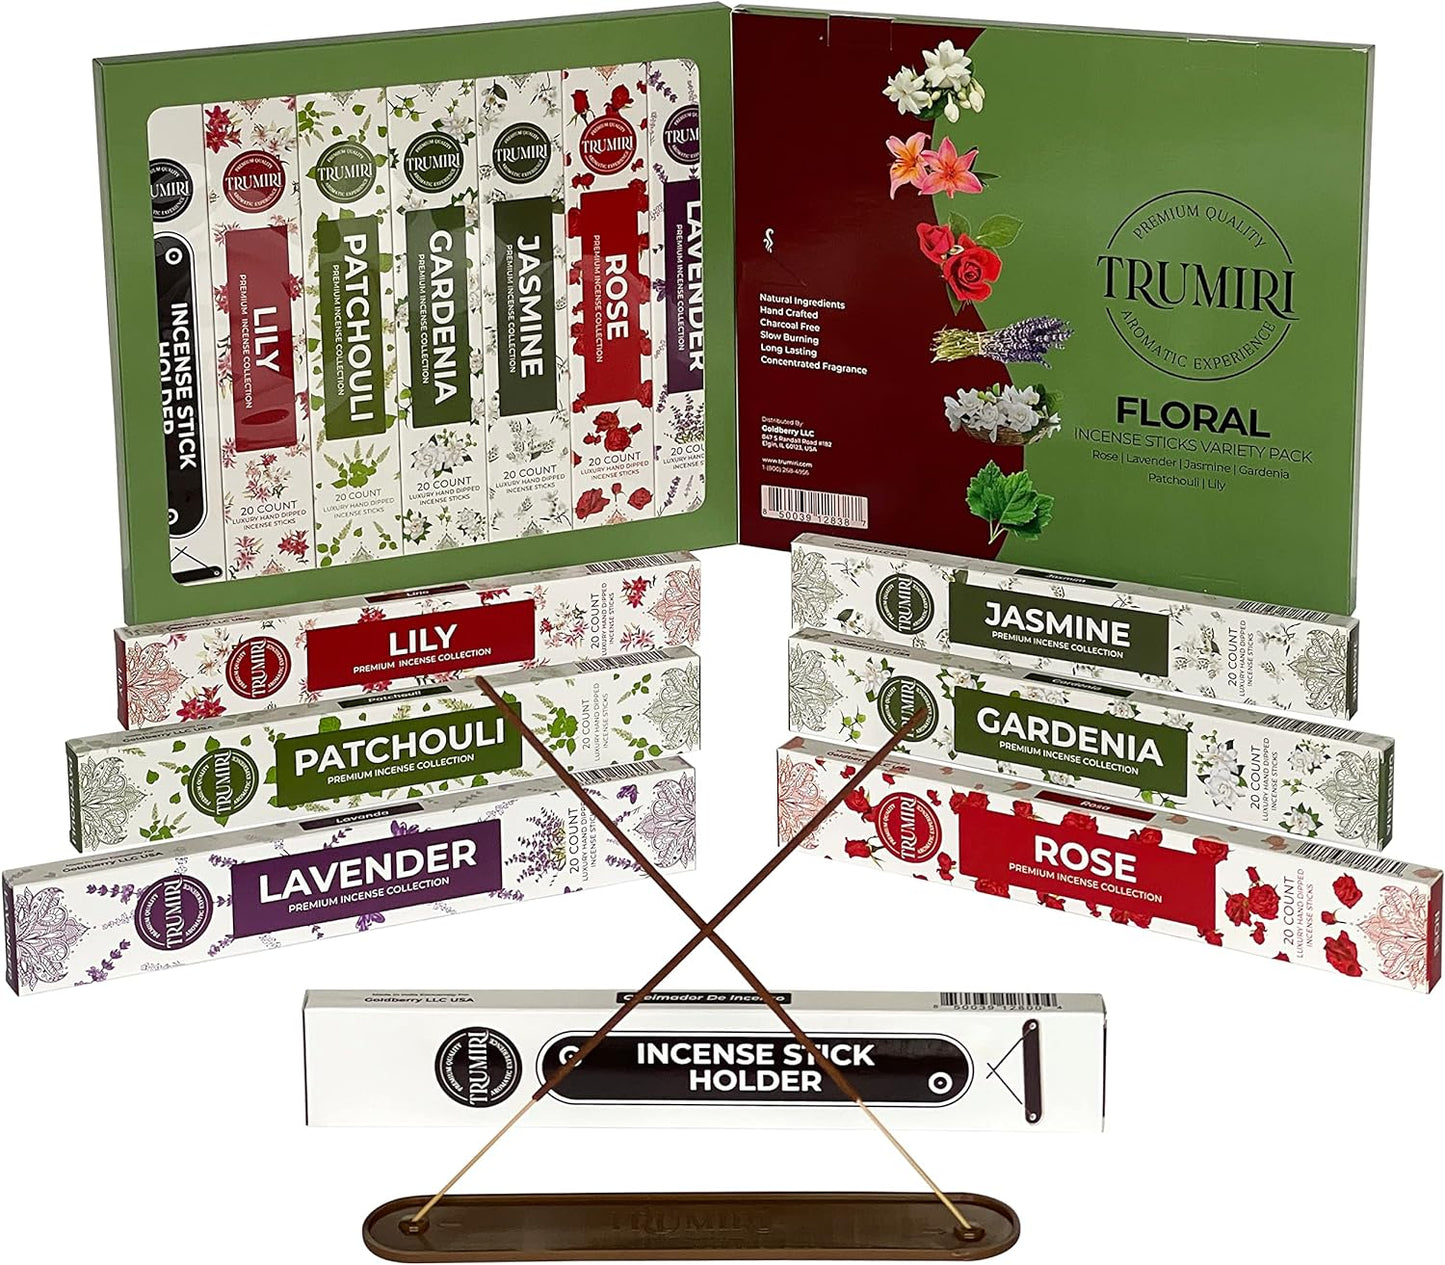 Floral Incense Sticks Variety Pack with Incense Holder